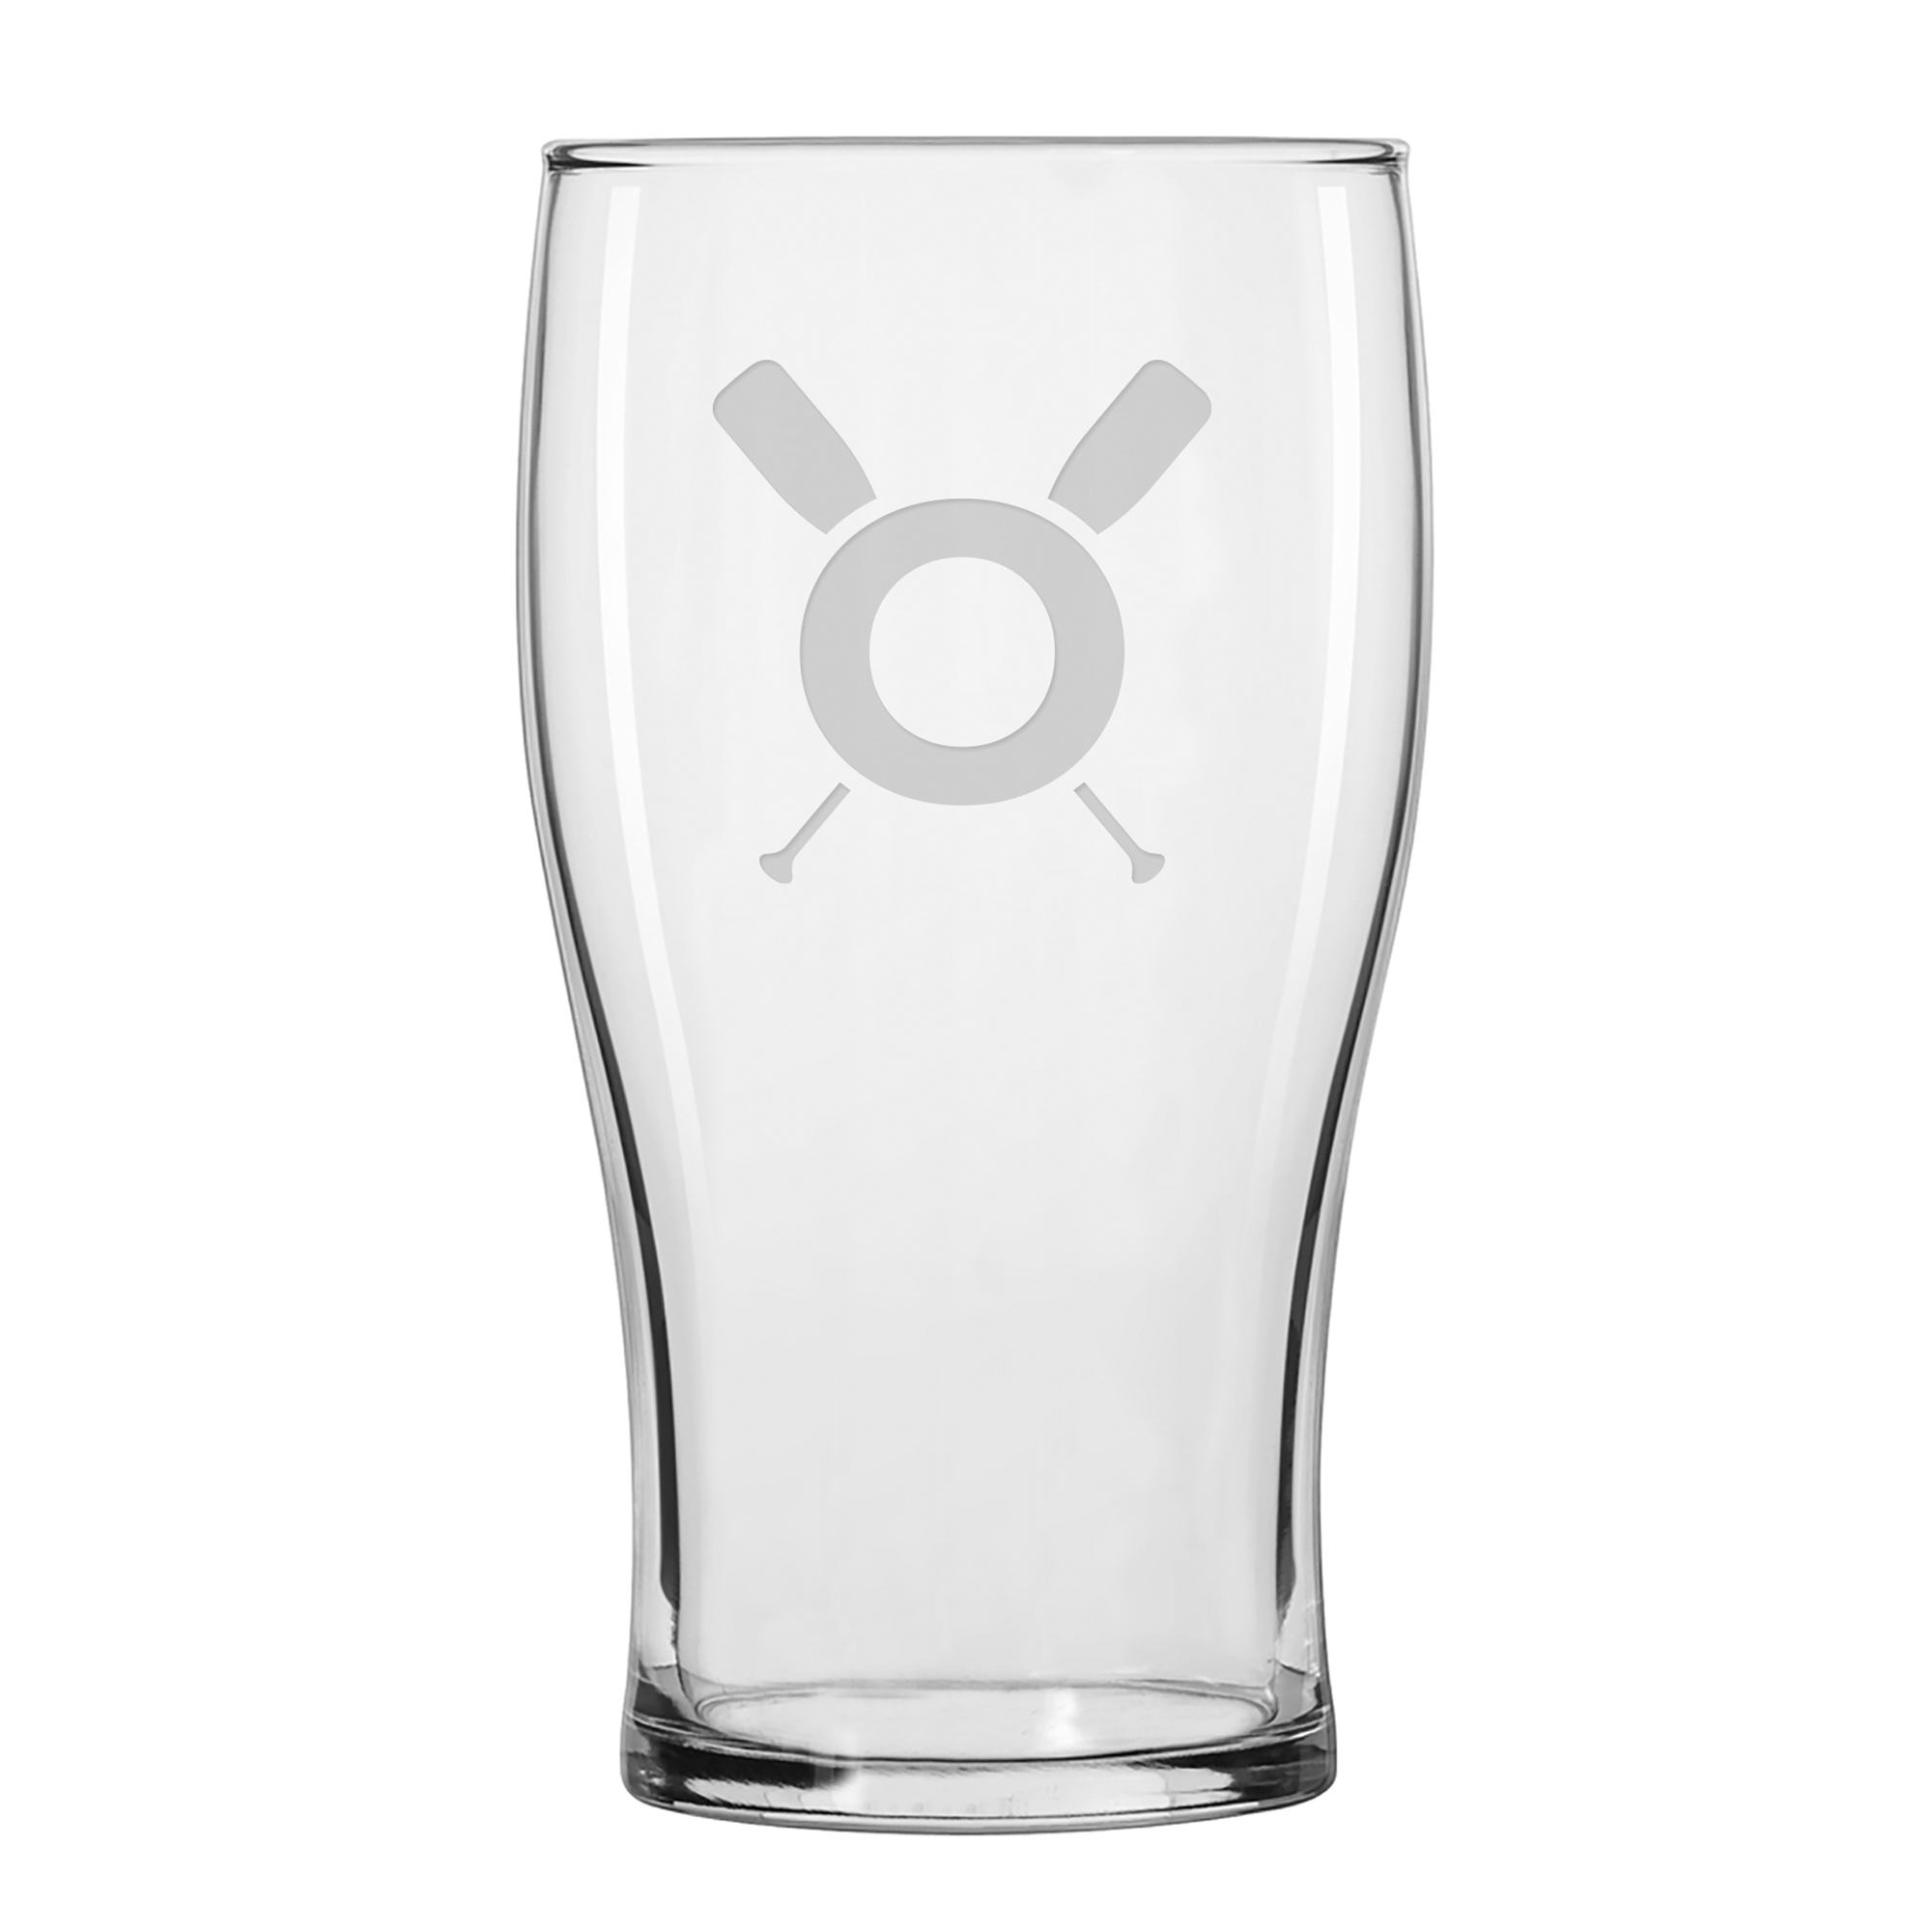 OAR House - Pub - Beer Glasses - Set of 12